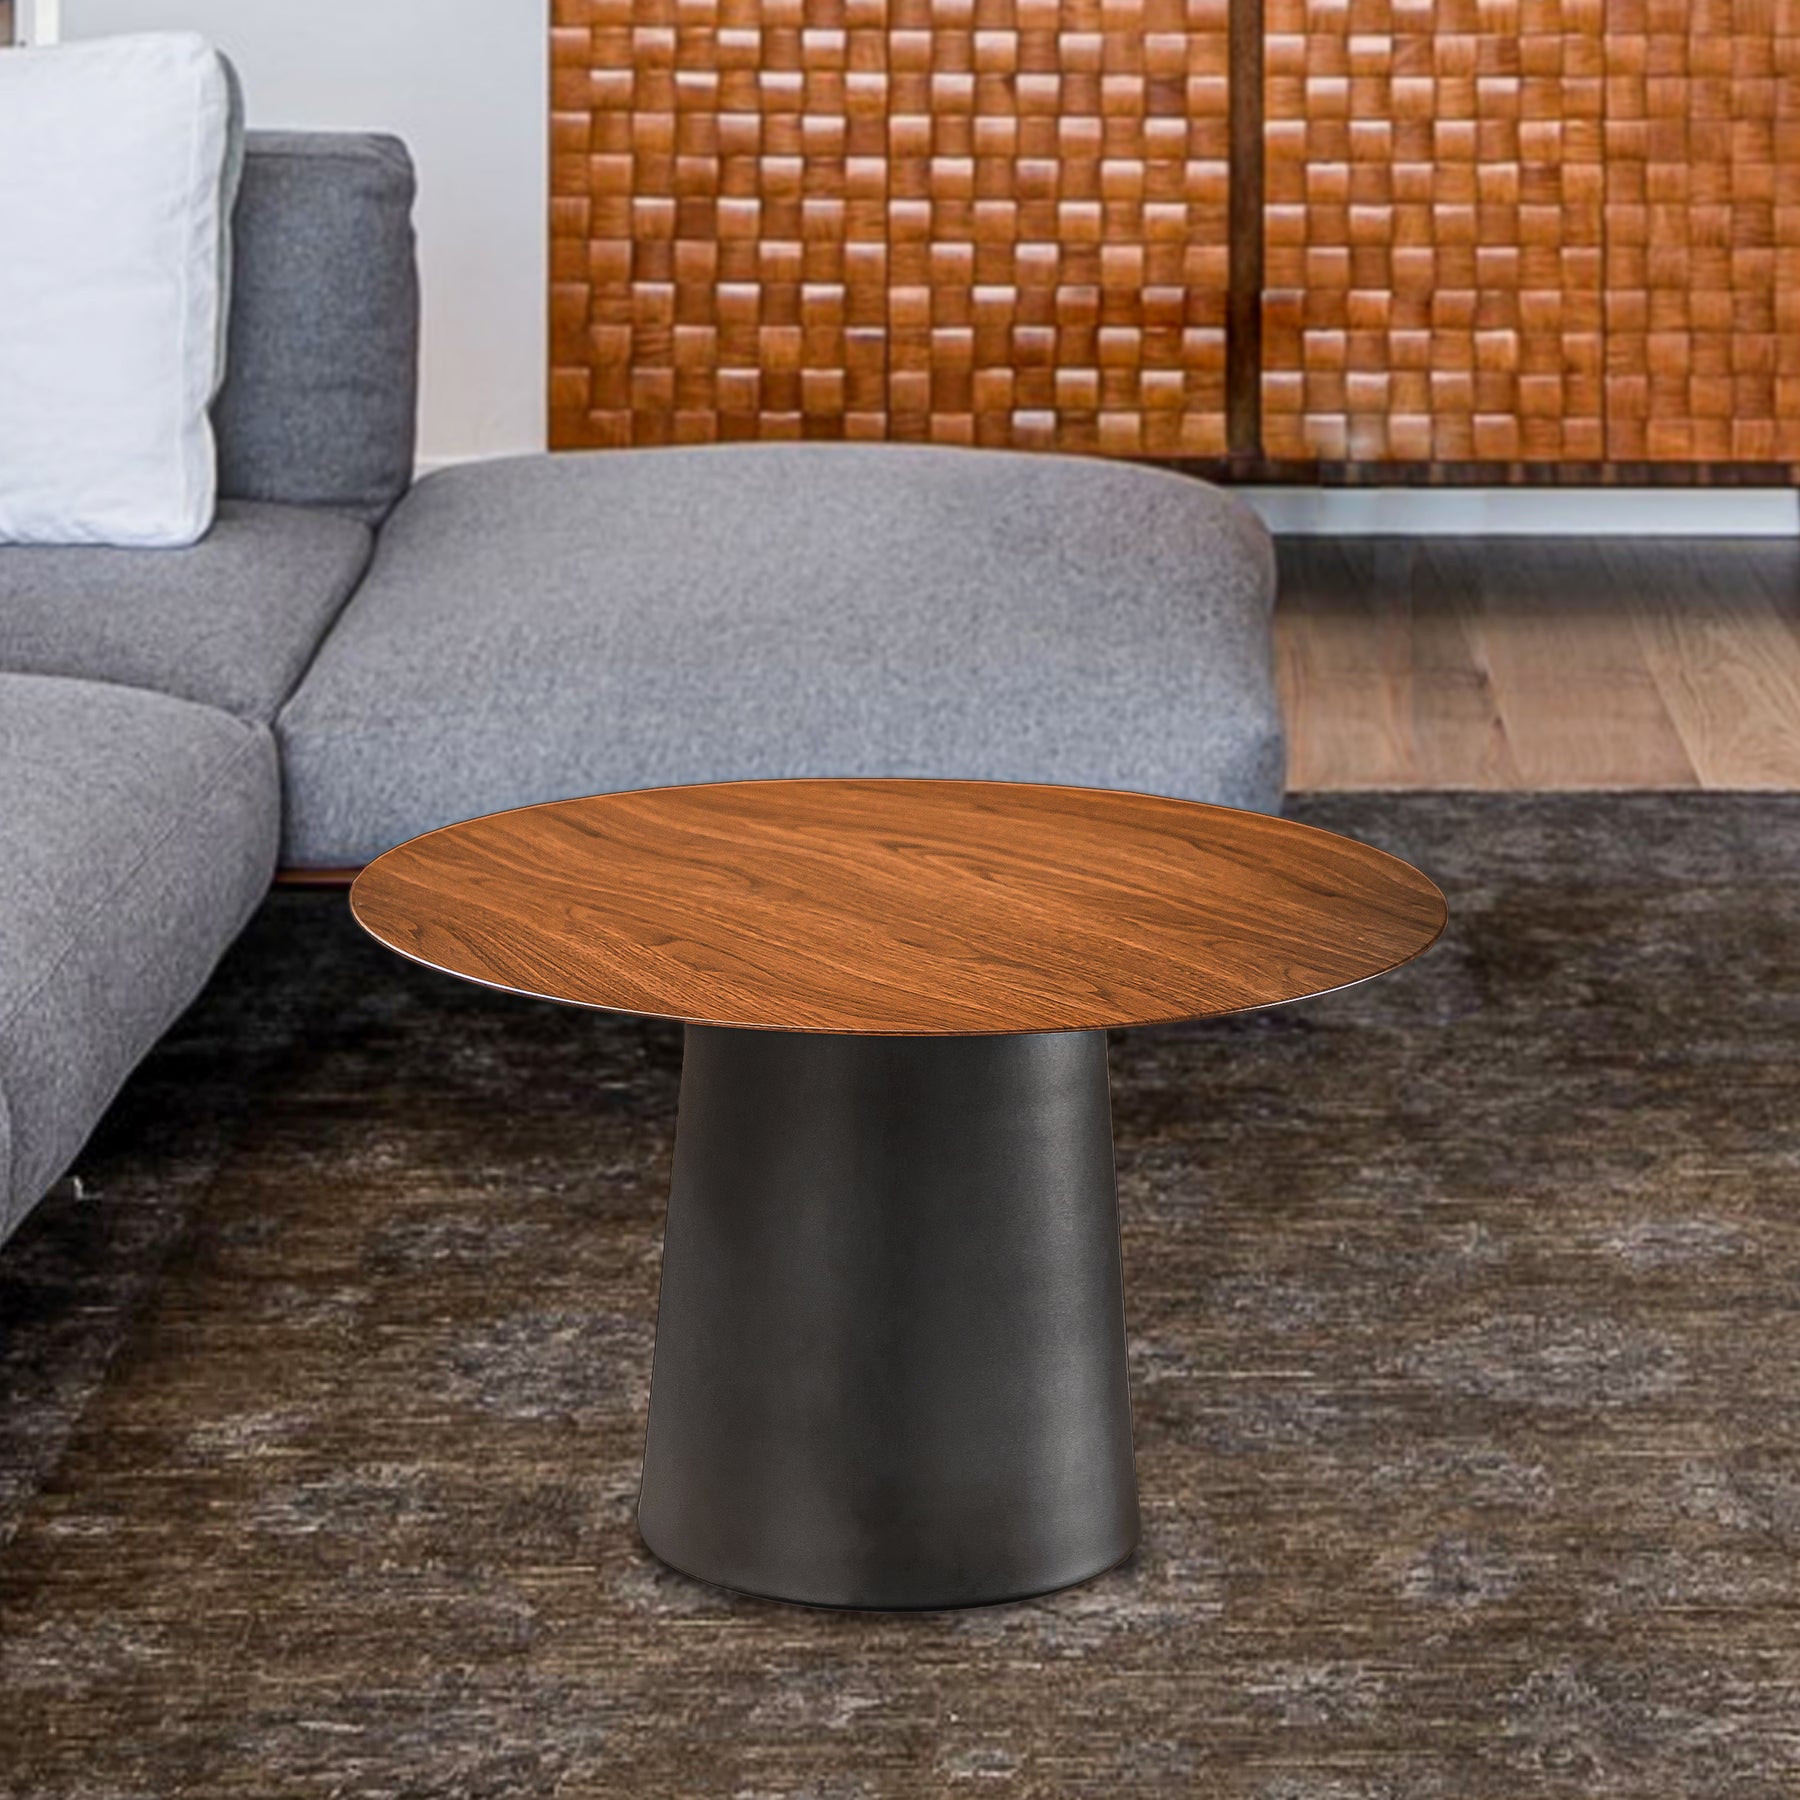 Mid Century Modern Metal Single Round Coffee Table -Walnut veneer 23.6"W